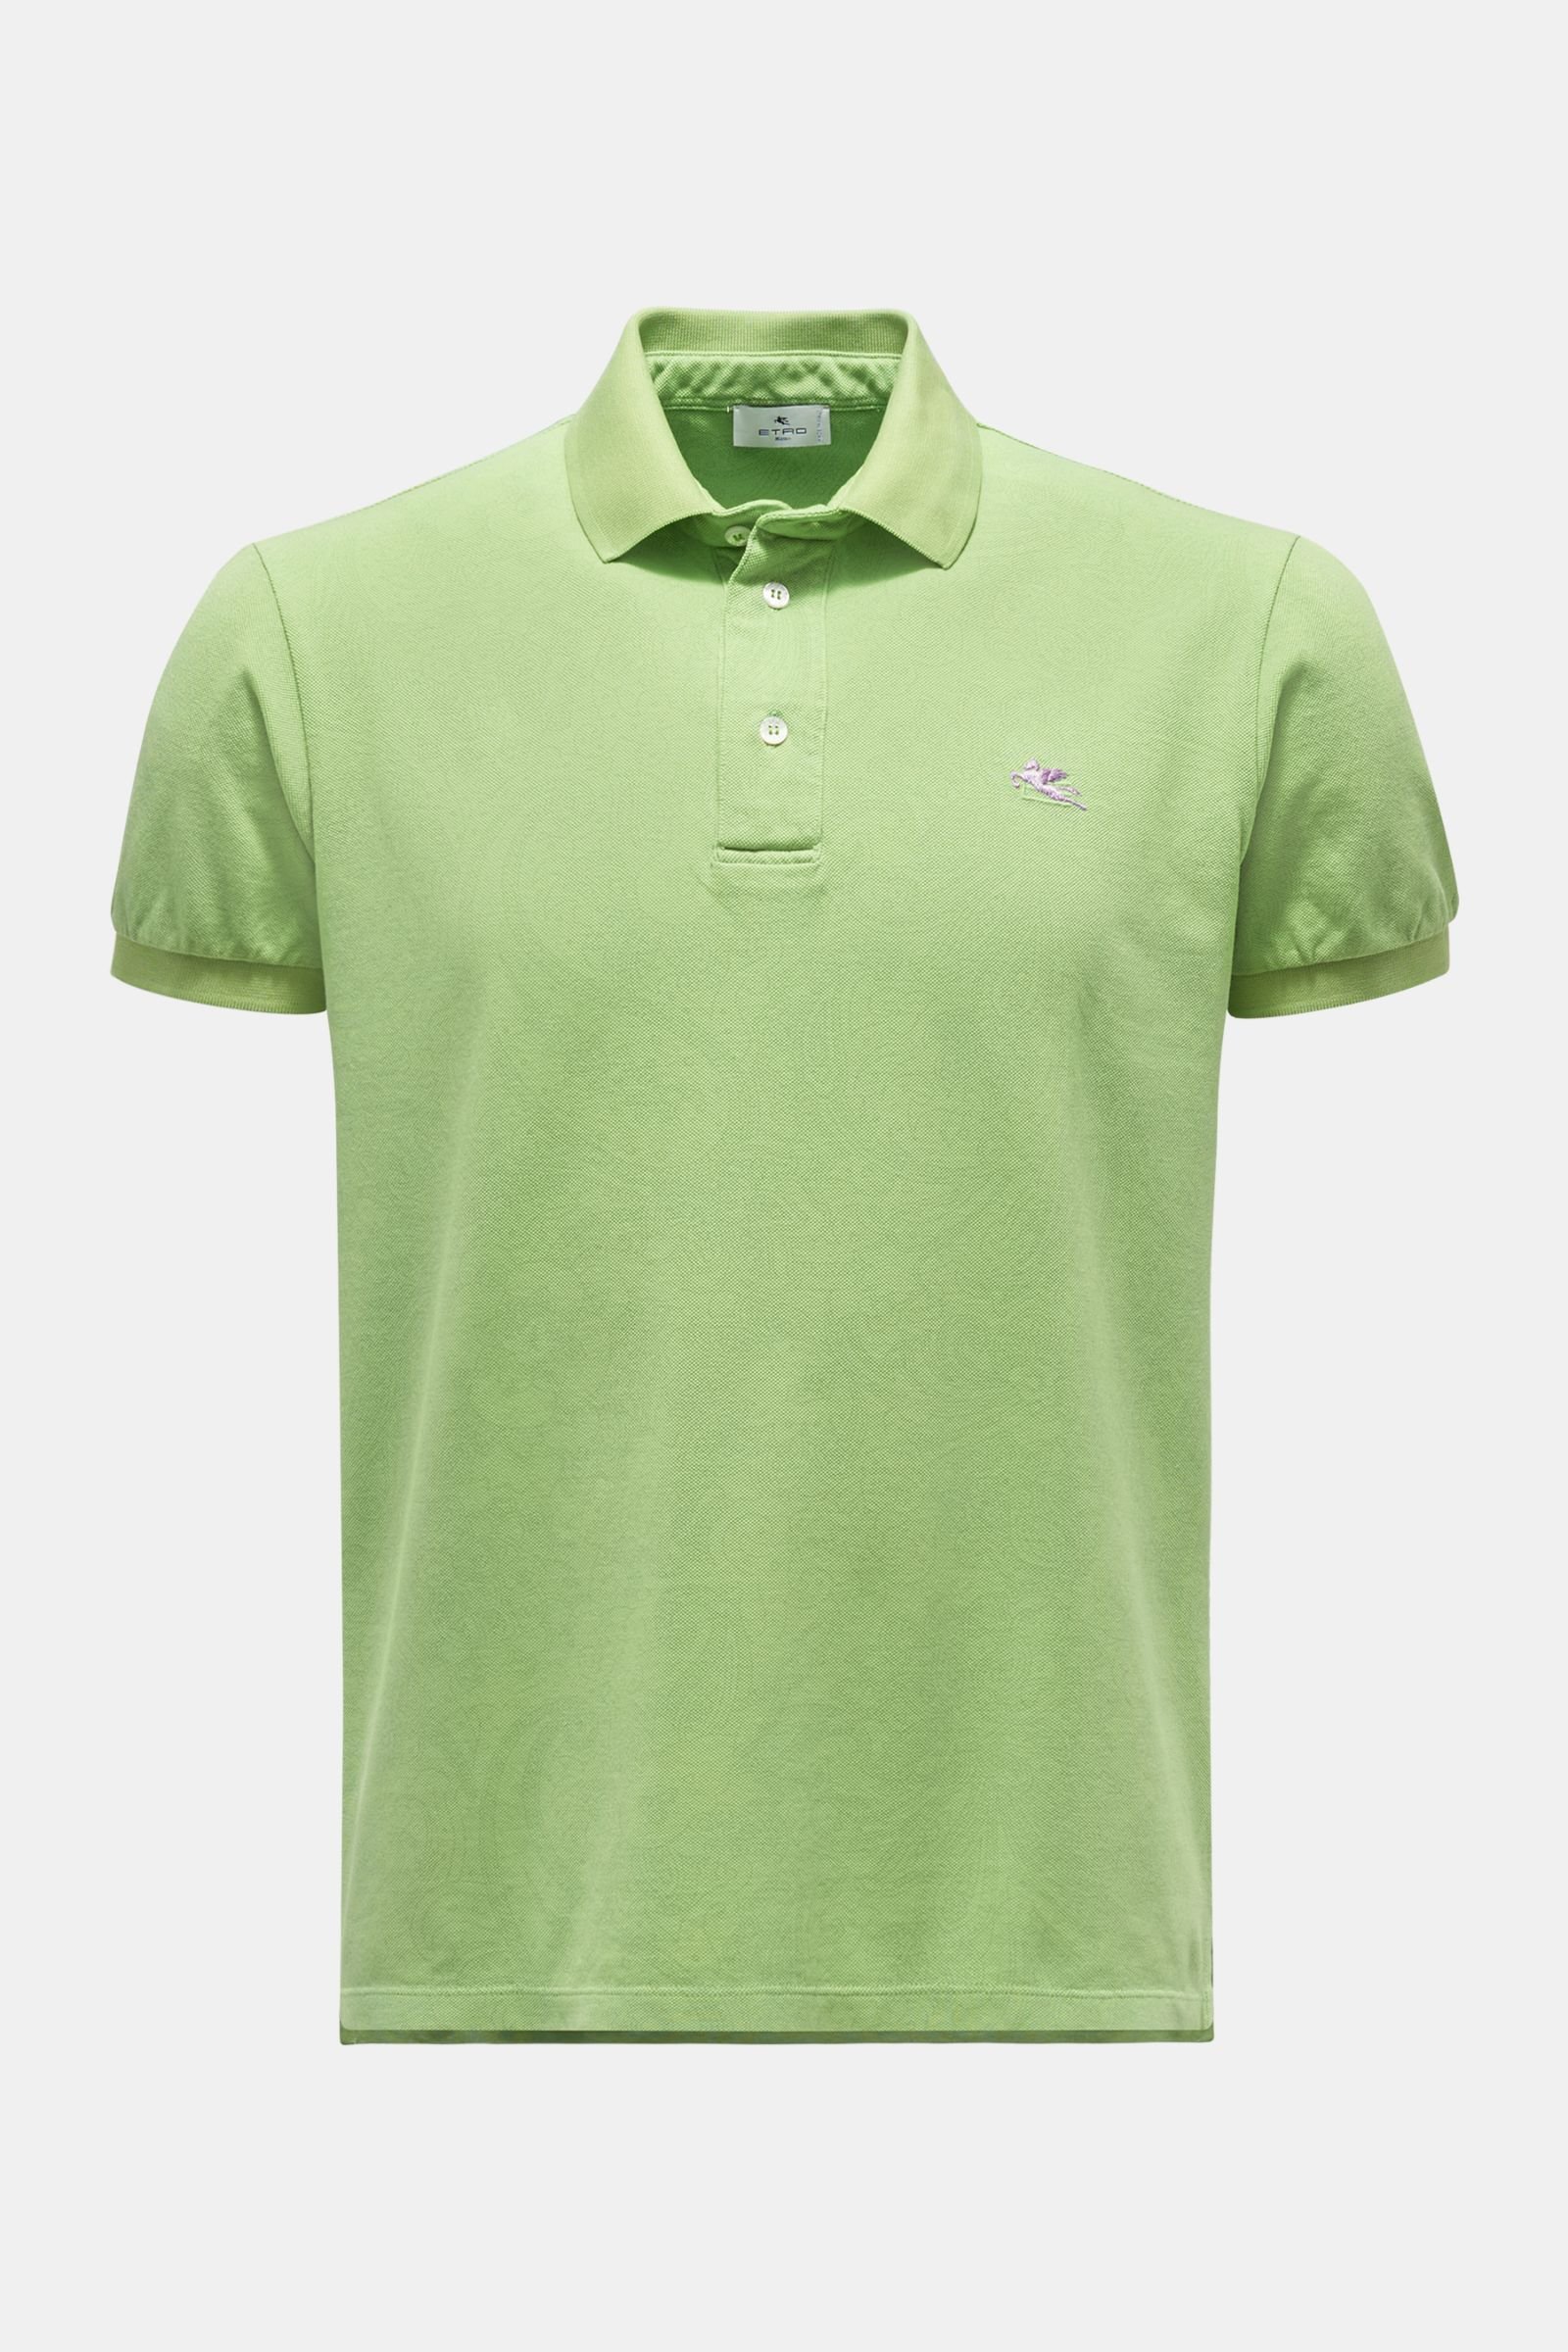 Polo shirt light green patterned